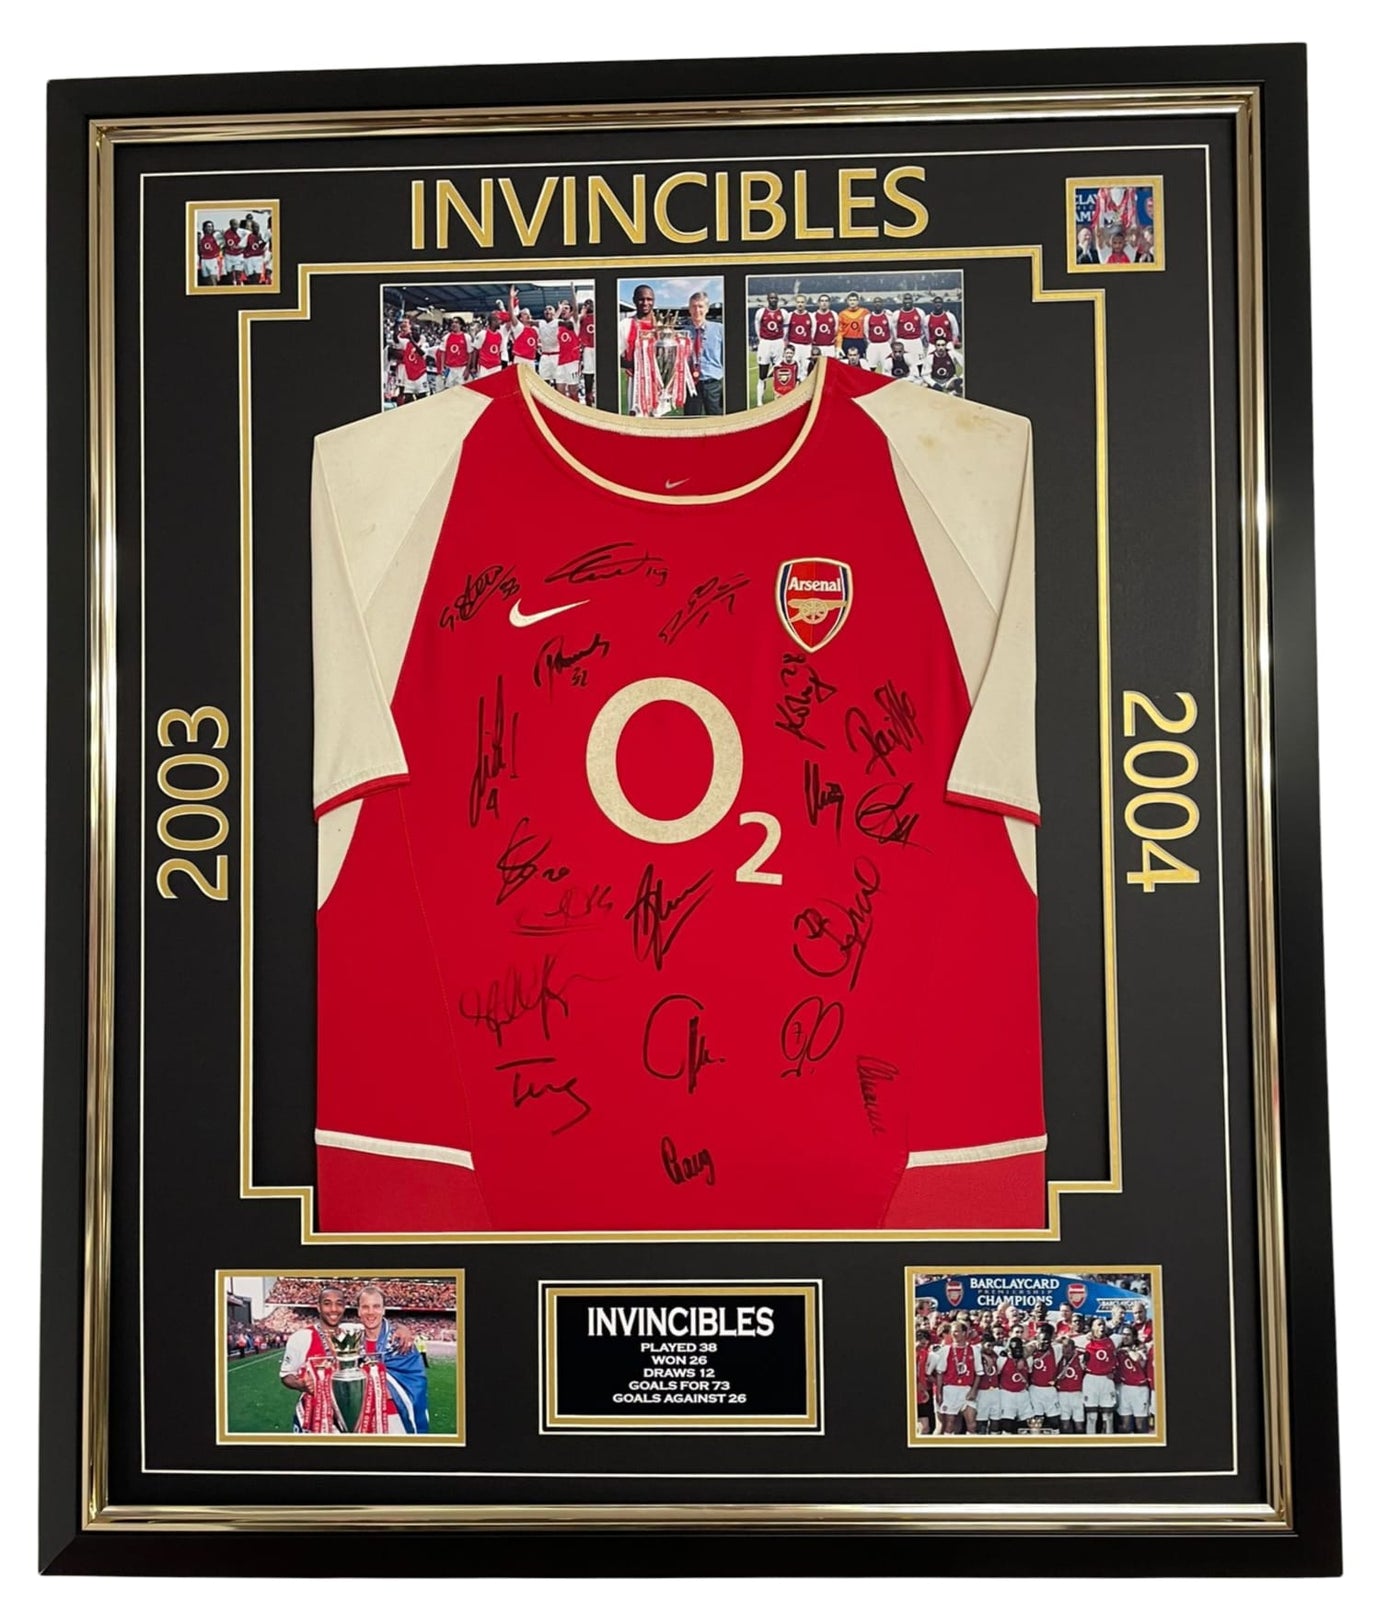 Invincibles team signed shirt.